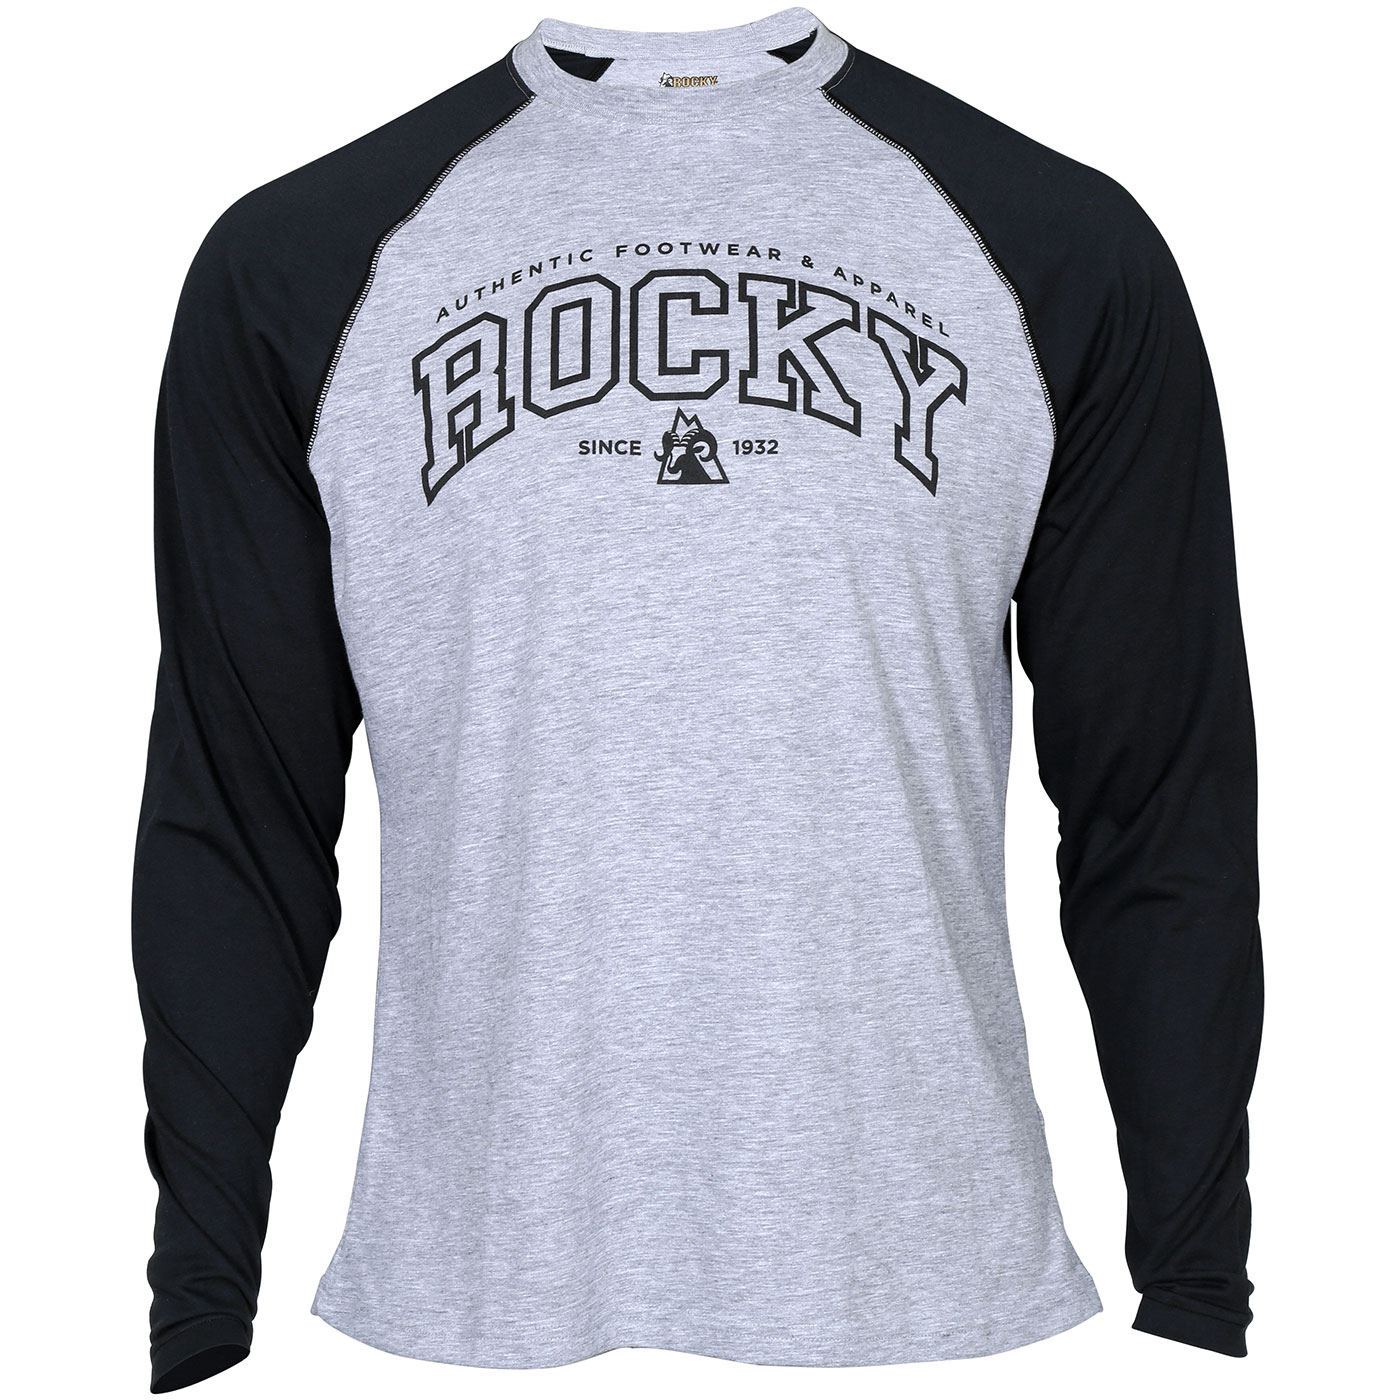 Download Men's Logo Long-Sleeve Gray and Black Raglan T-Shirt, Rocky